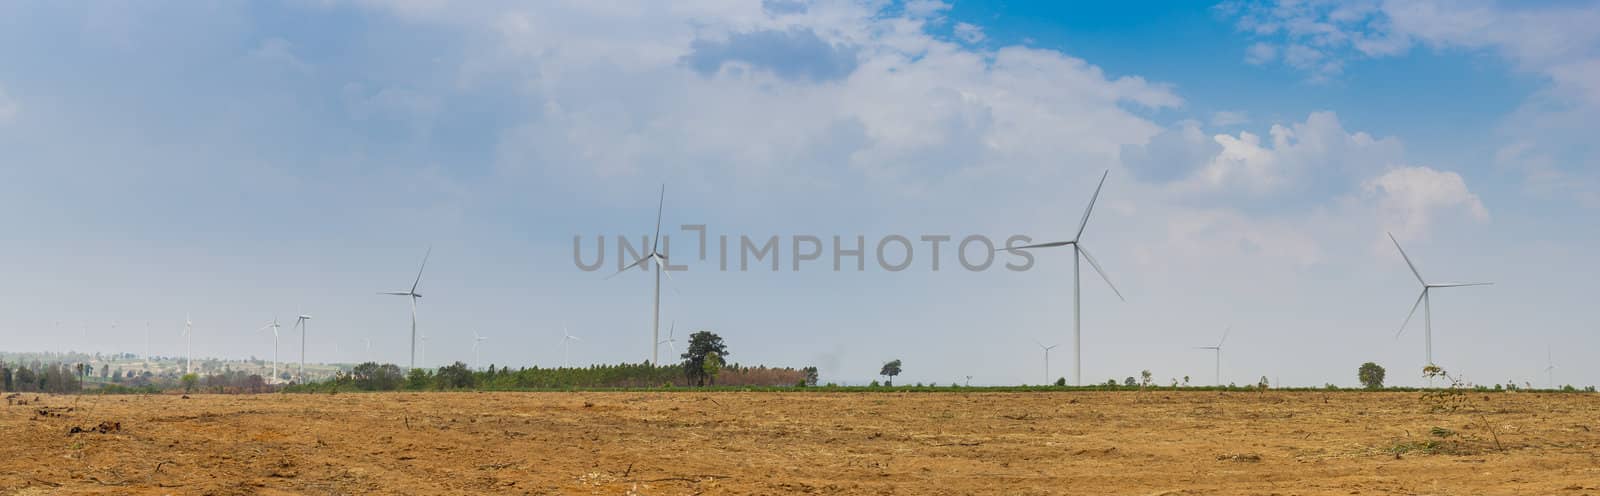 Eco power, wind turbines field panorama